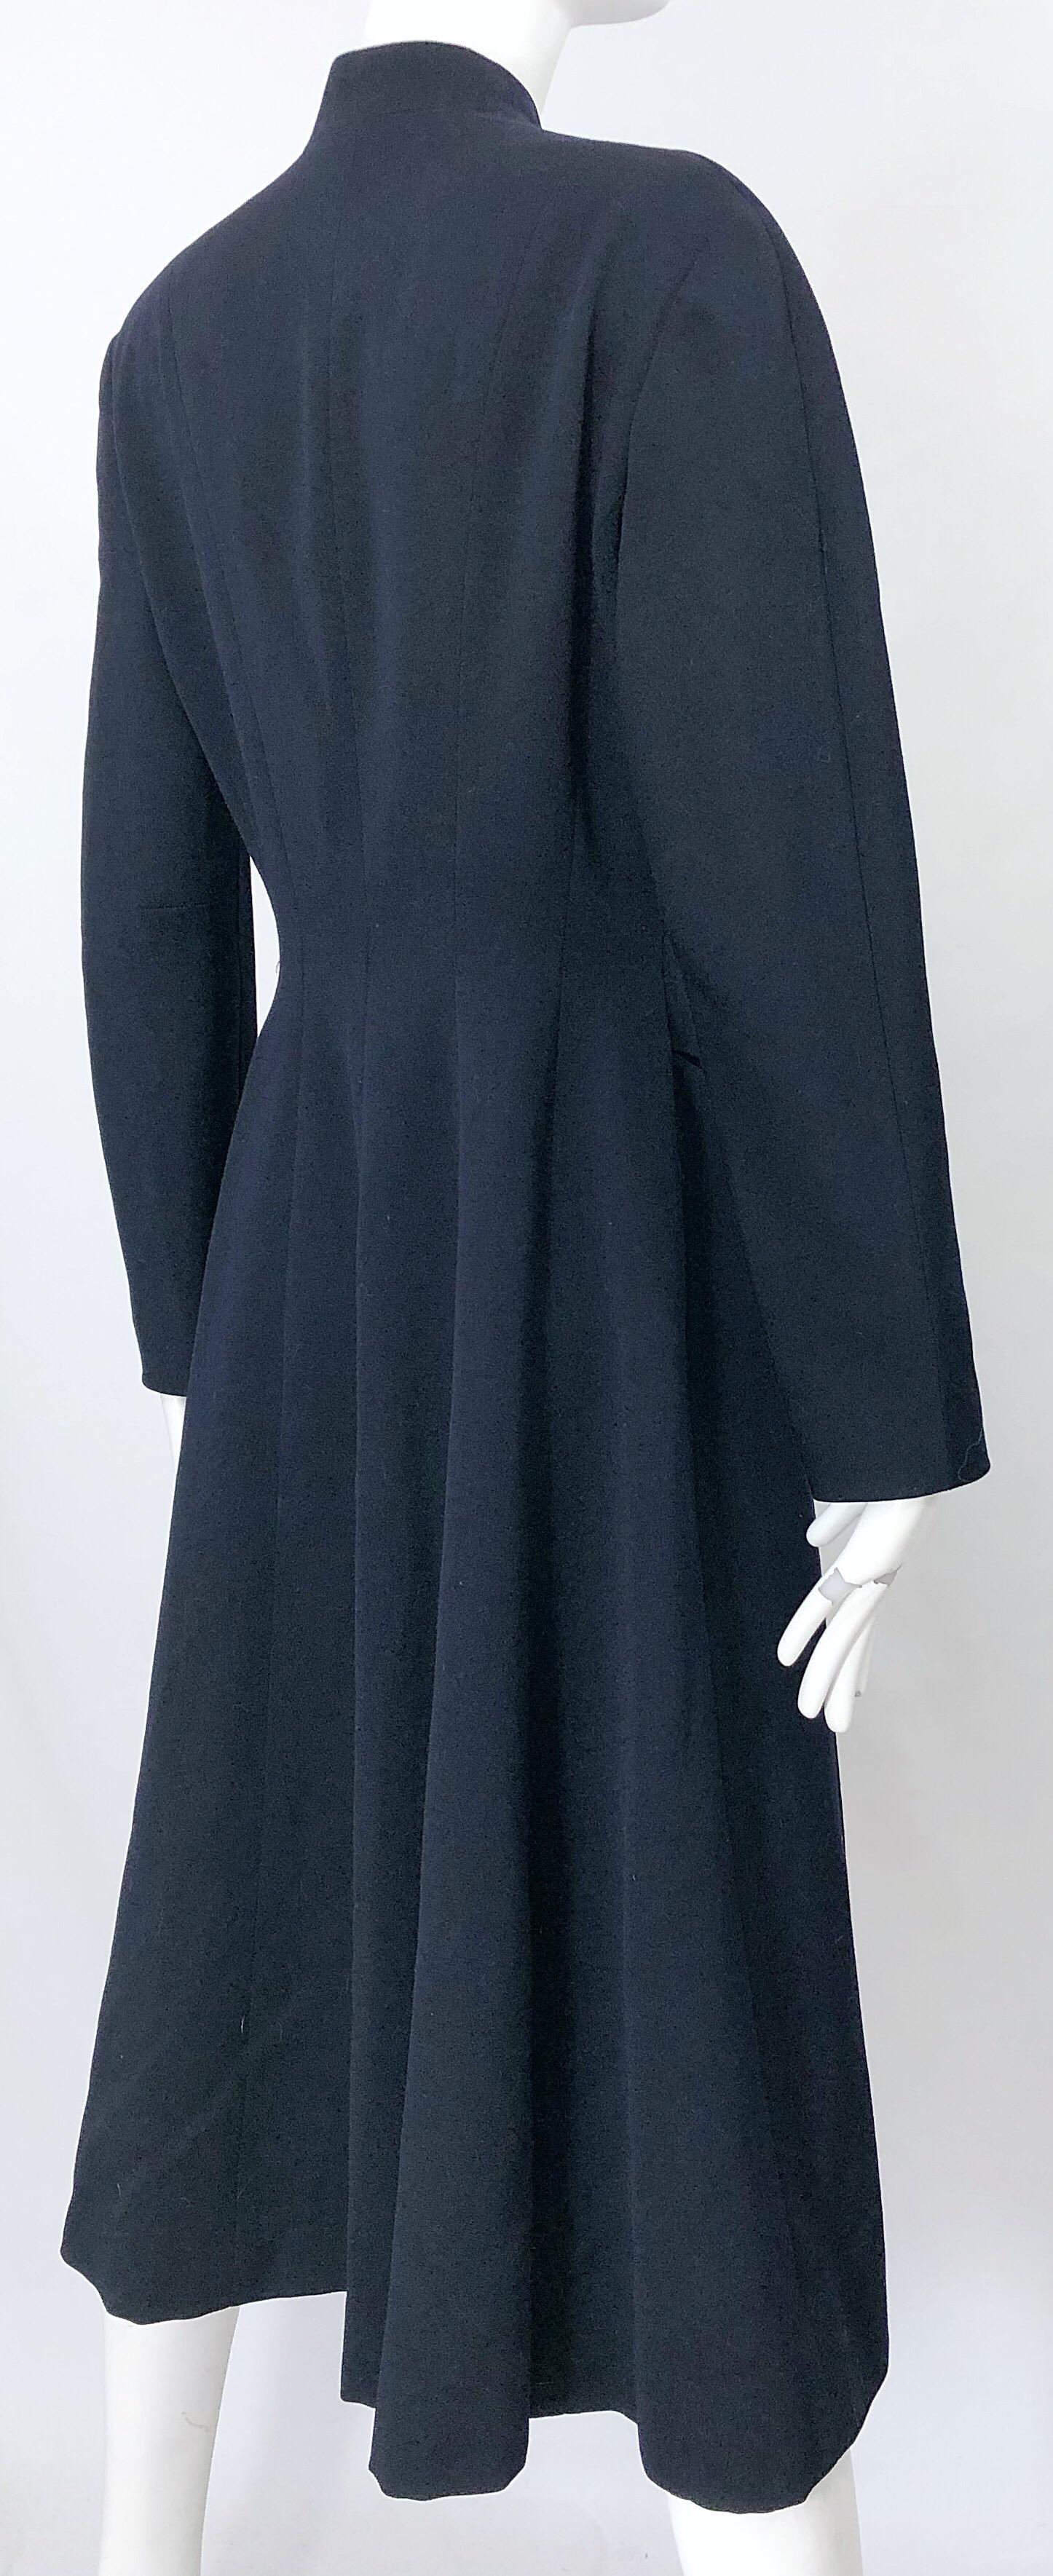 1940s Navy Blue Sleek Deco Style Vintage 40s Princess Jacket Coat w/ Pockets For Sale 2